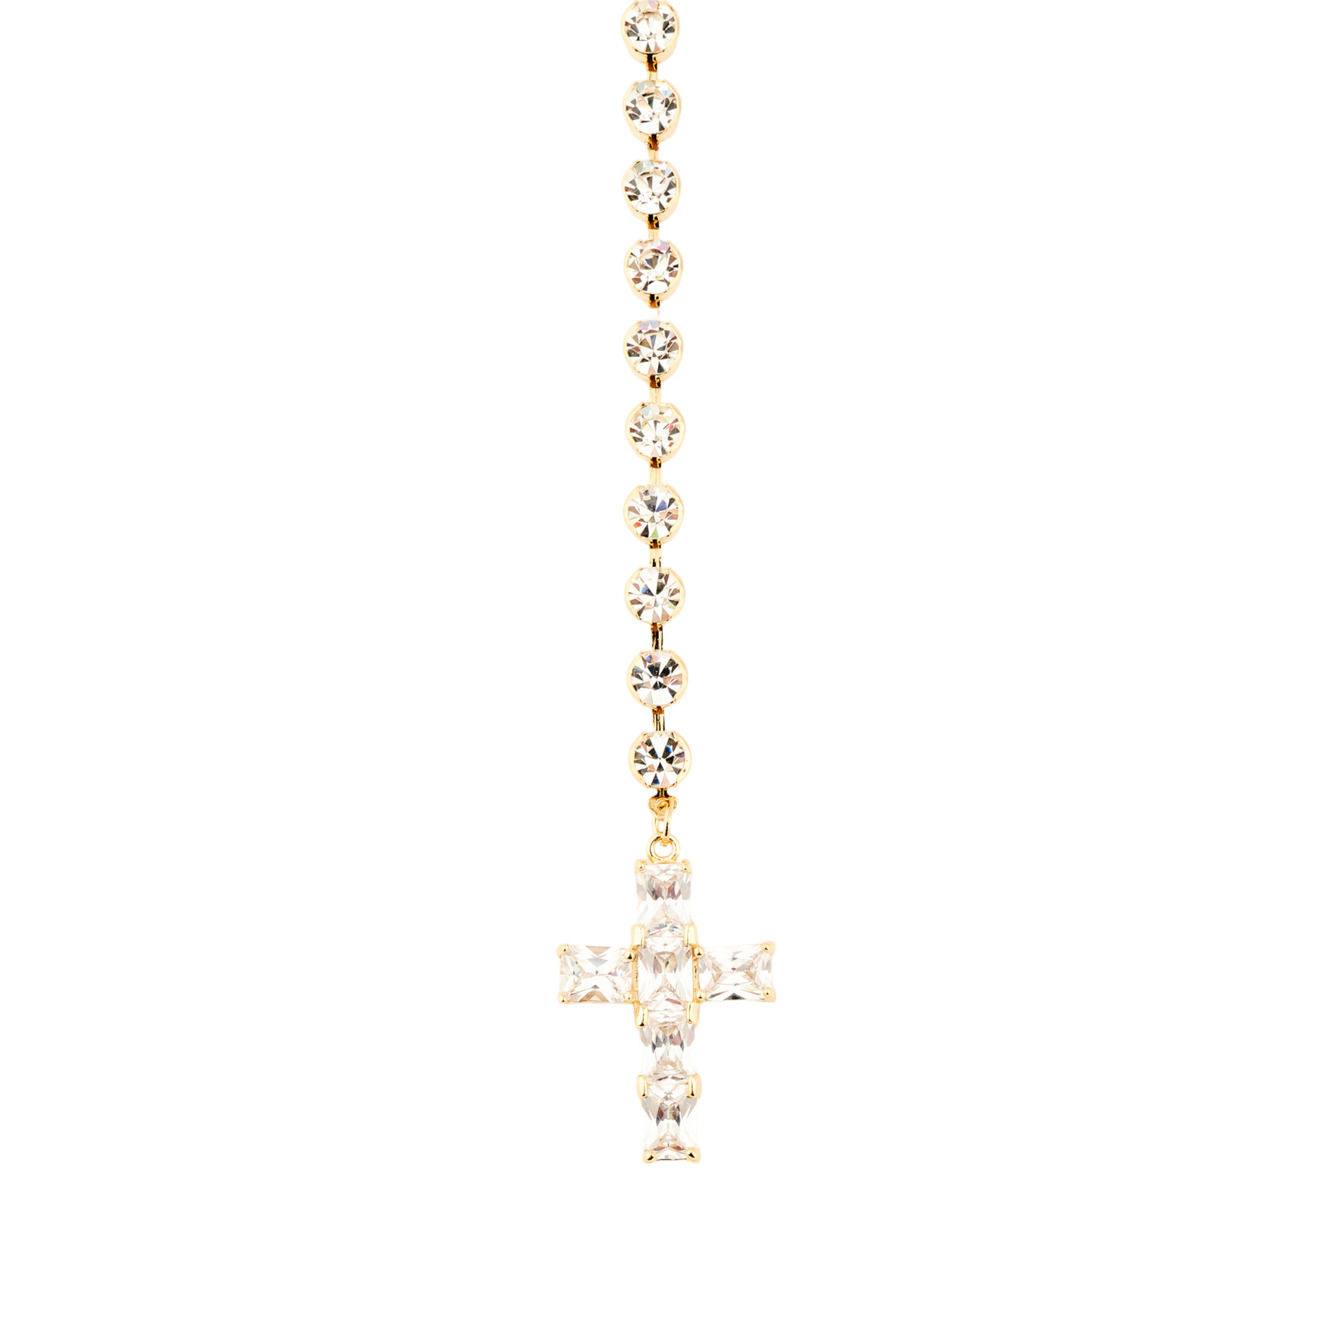 Herald Percy Золотистый сотуар с белыми кристаллами и подвеской крестом herald percy золотистый браслет с кристаллами